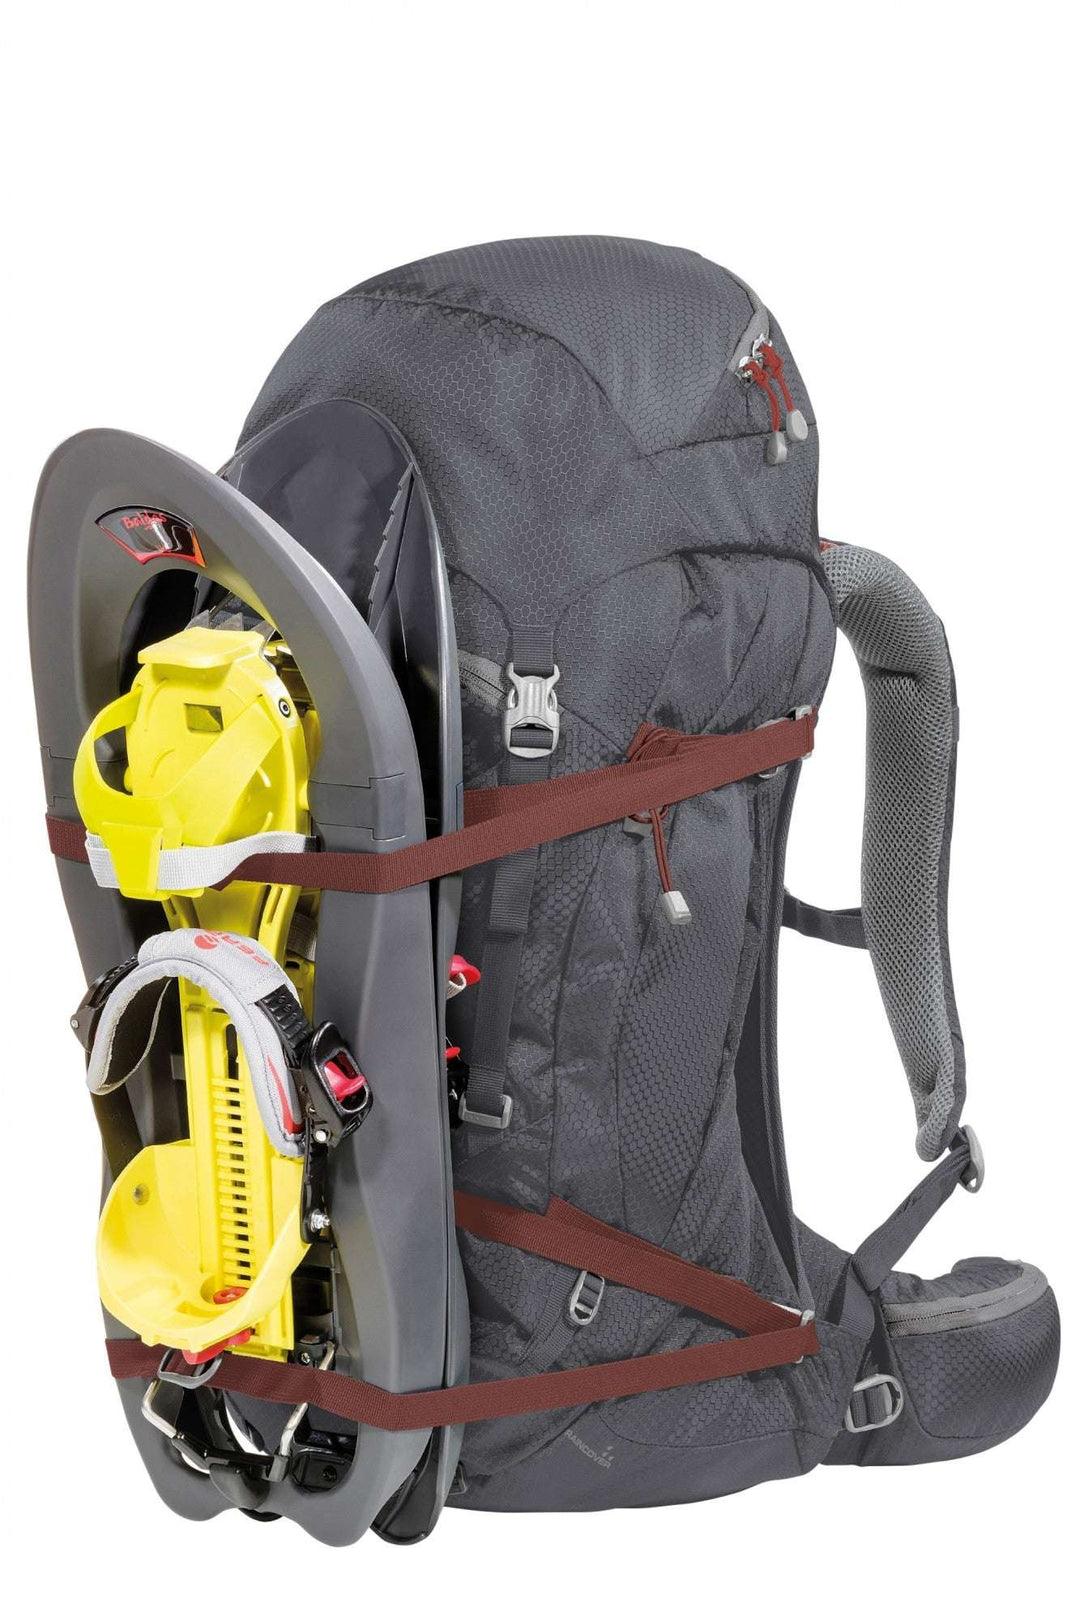 Finisterre 38 backpack